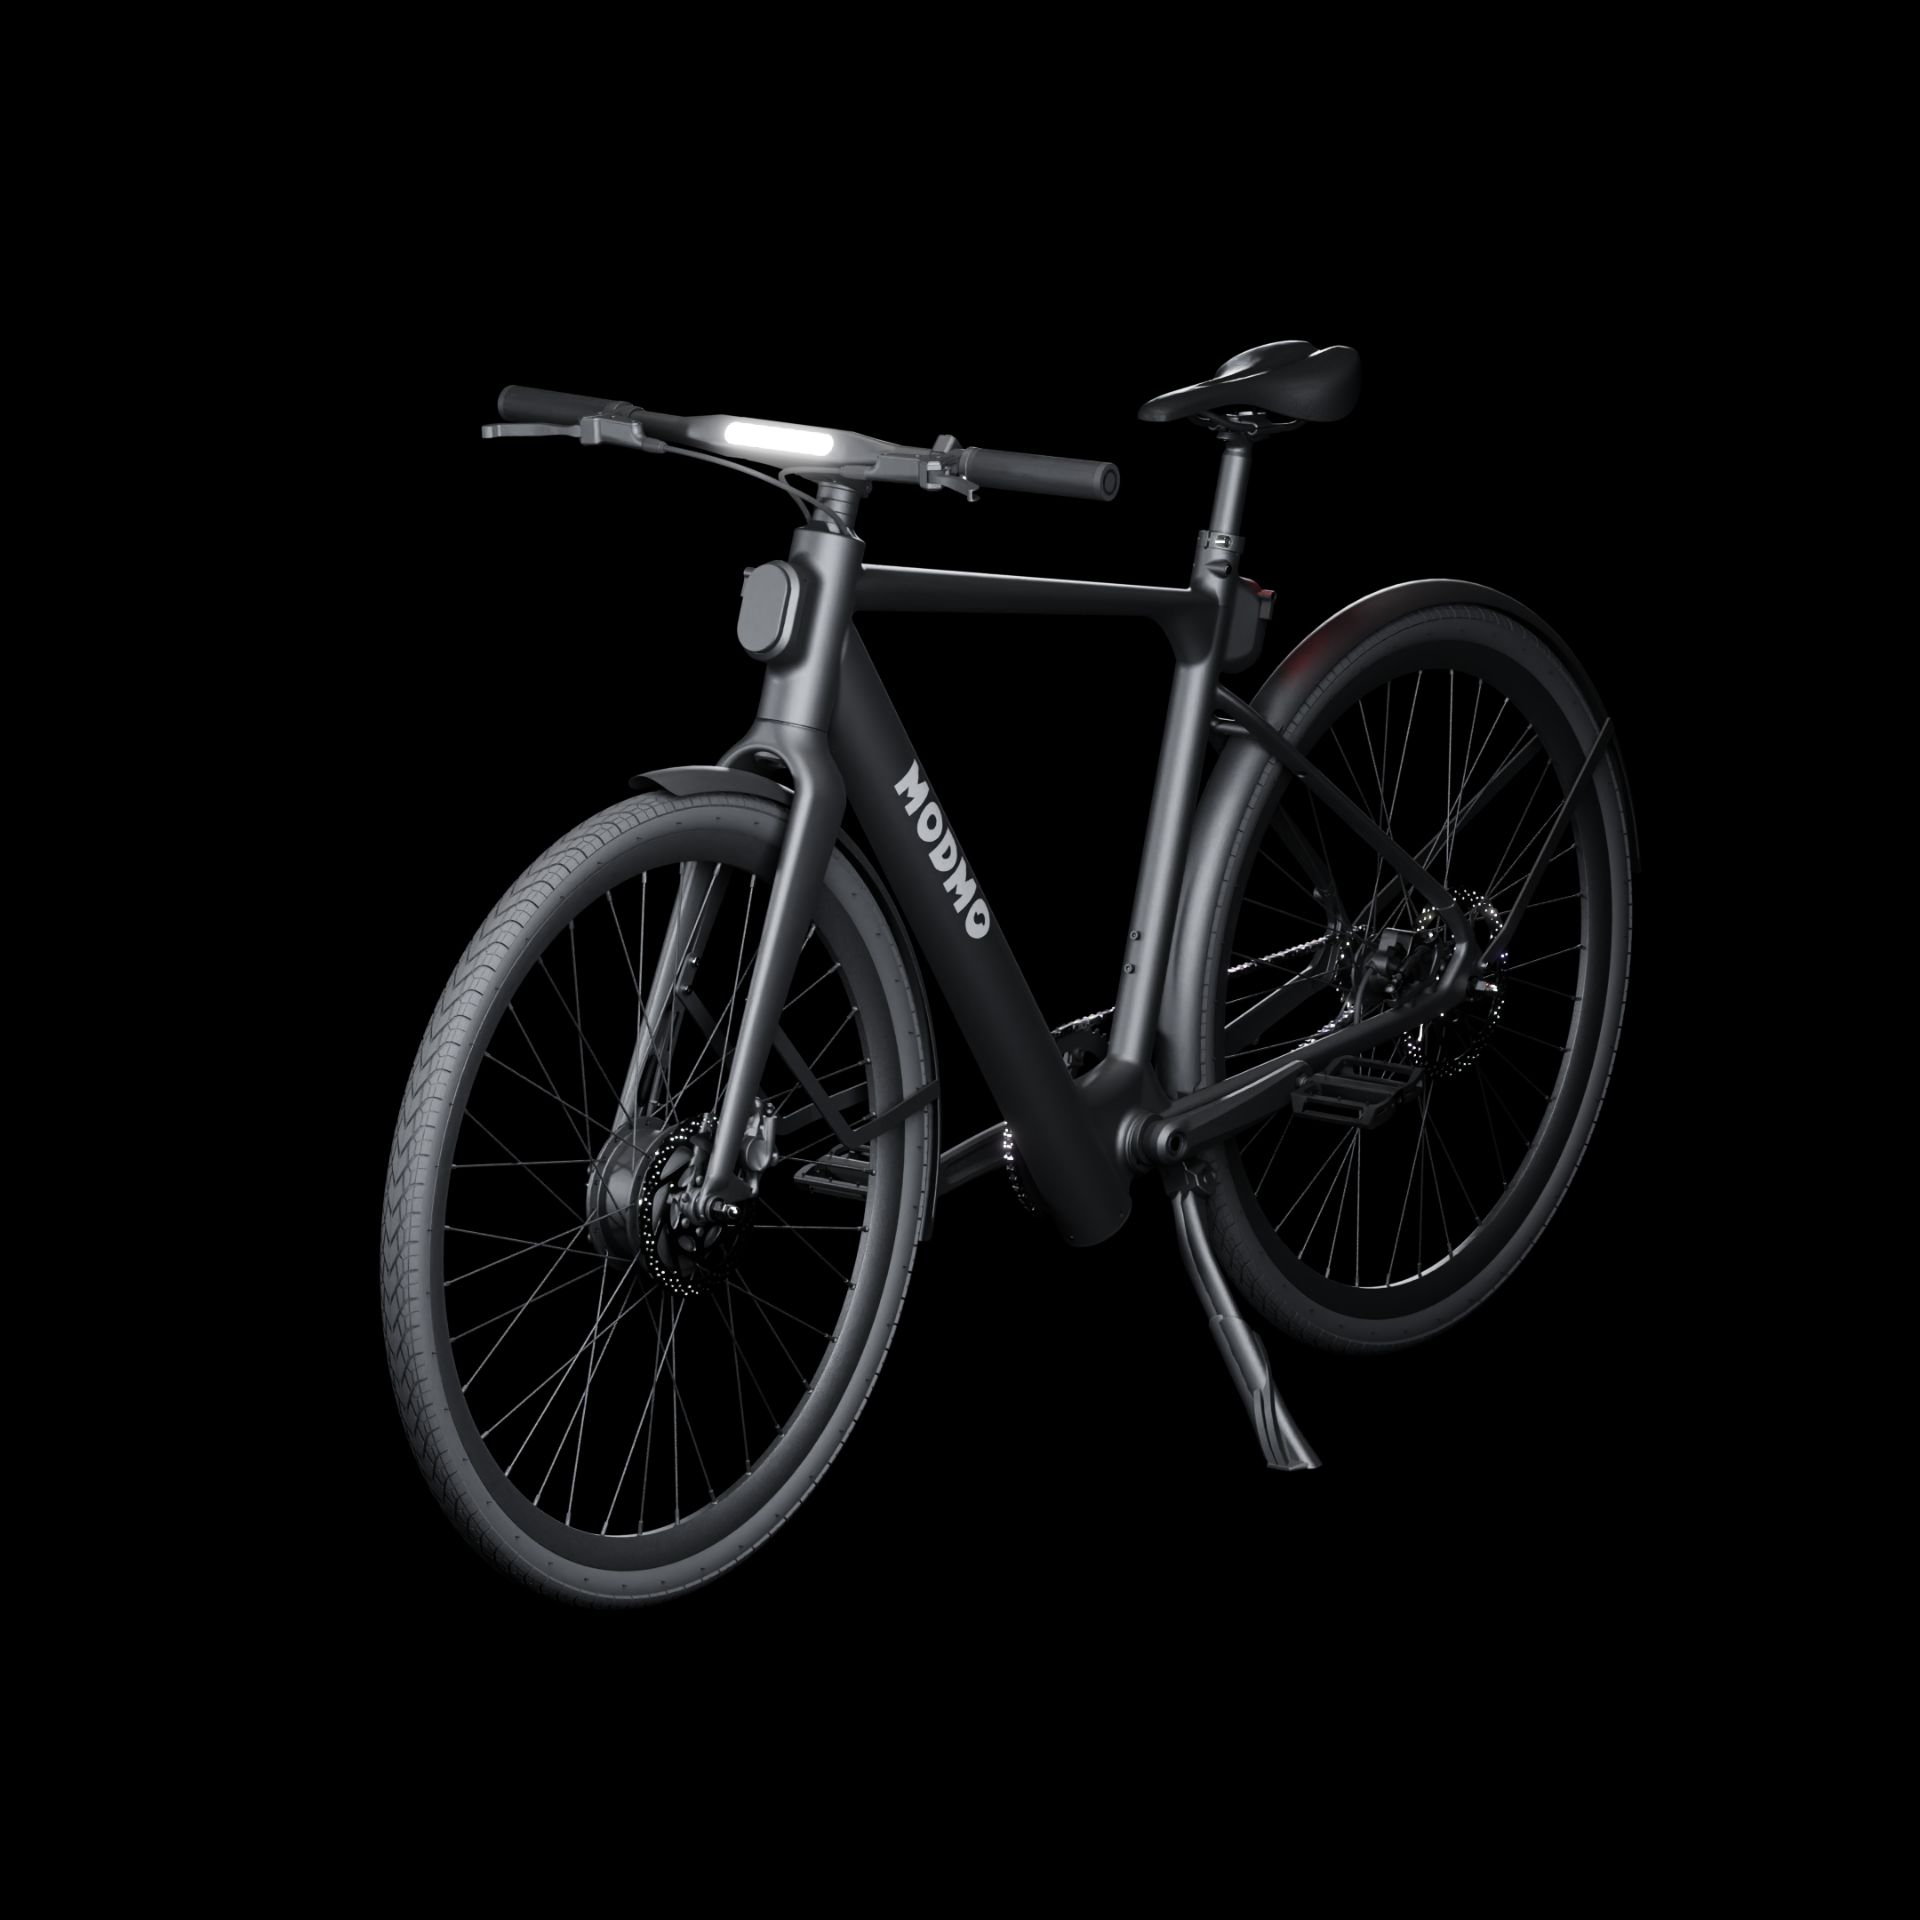 Modmo Saigon+ Electric Bicycle - RRP £2800 - Size L (Rider 175-190cm) - Image 10 of 15